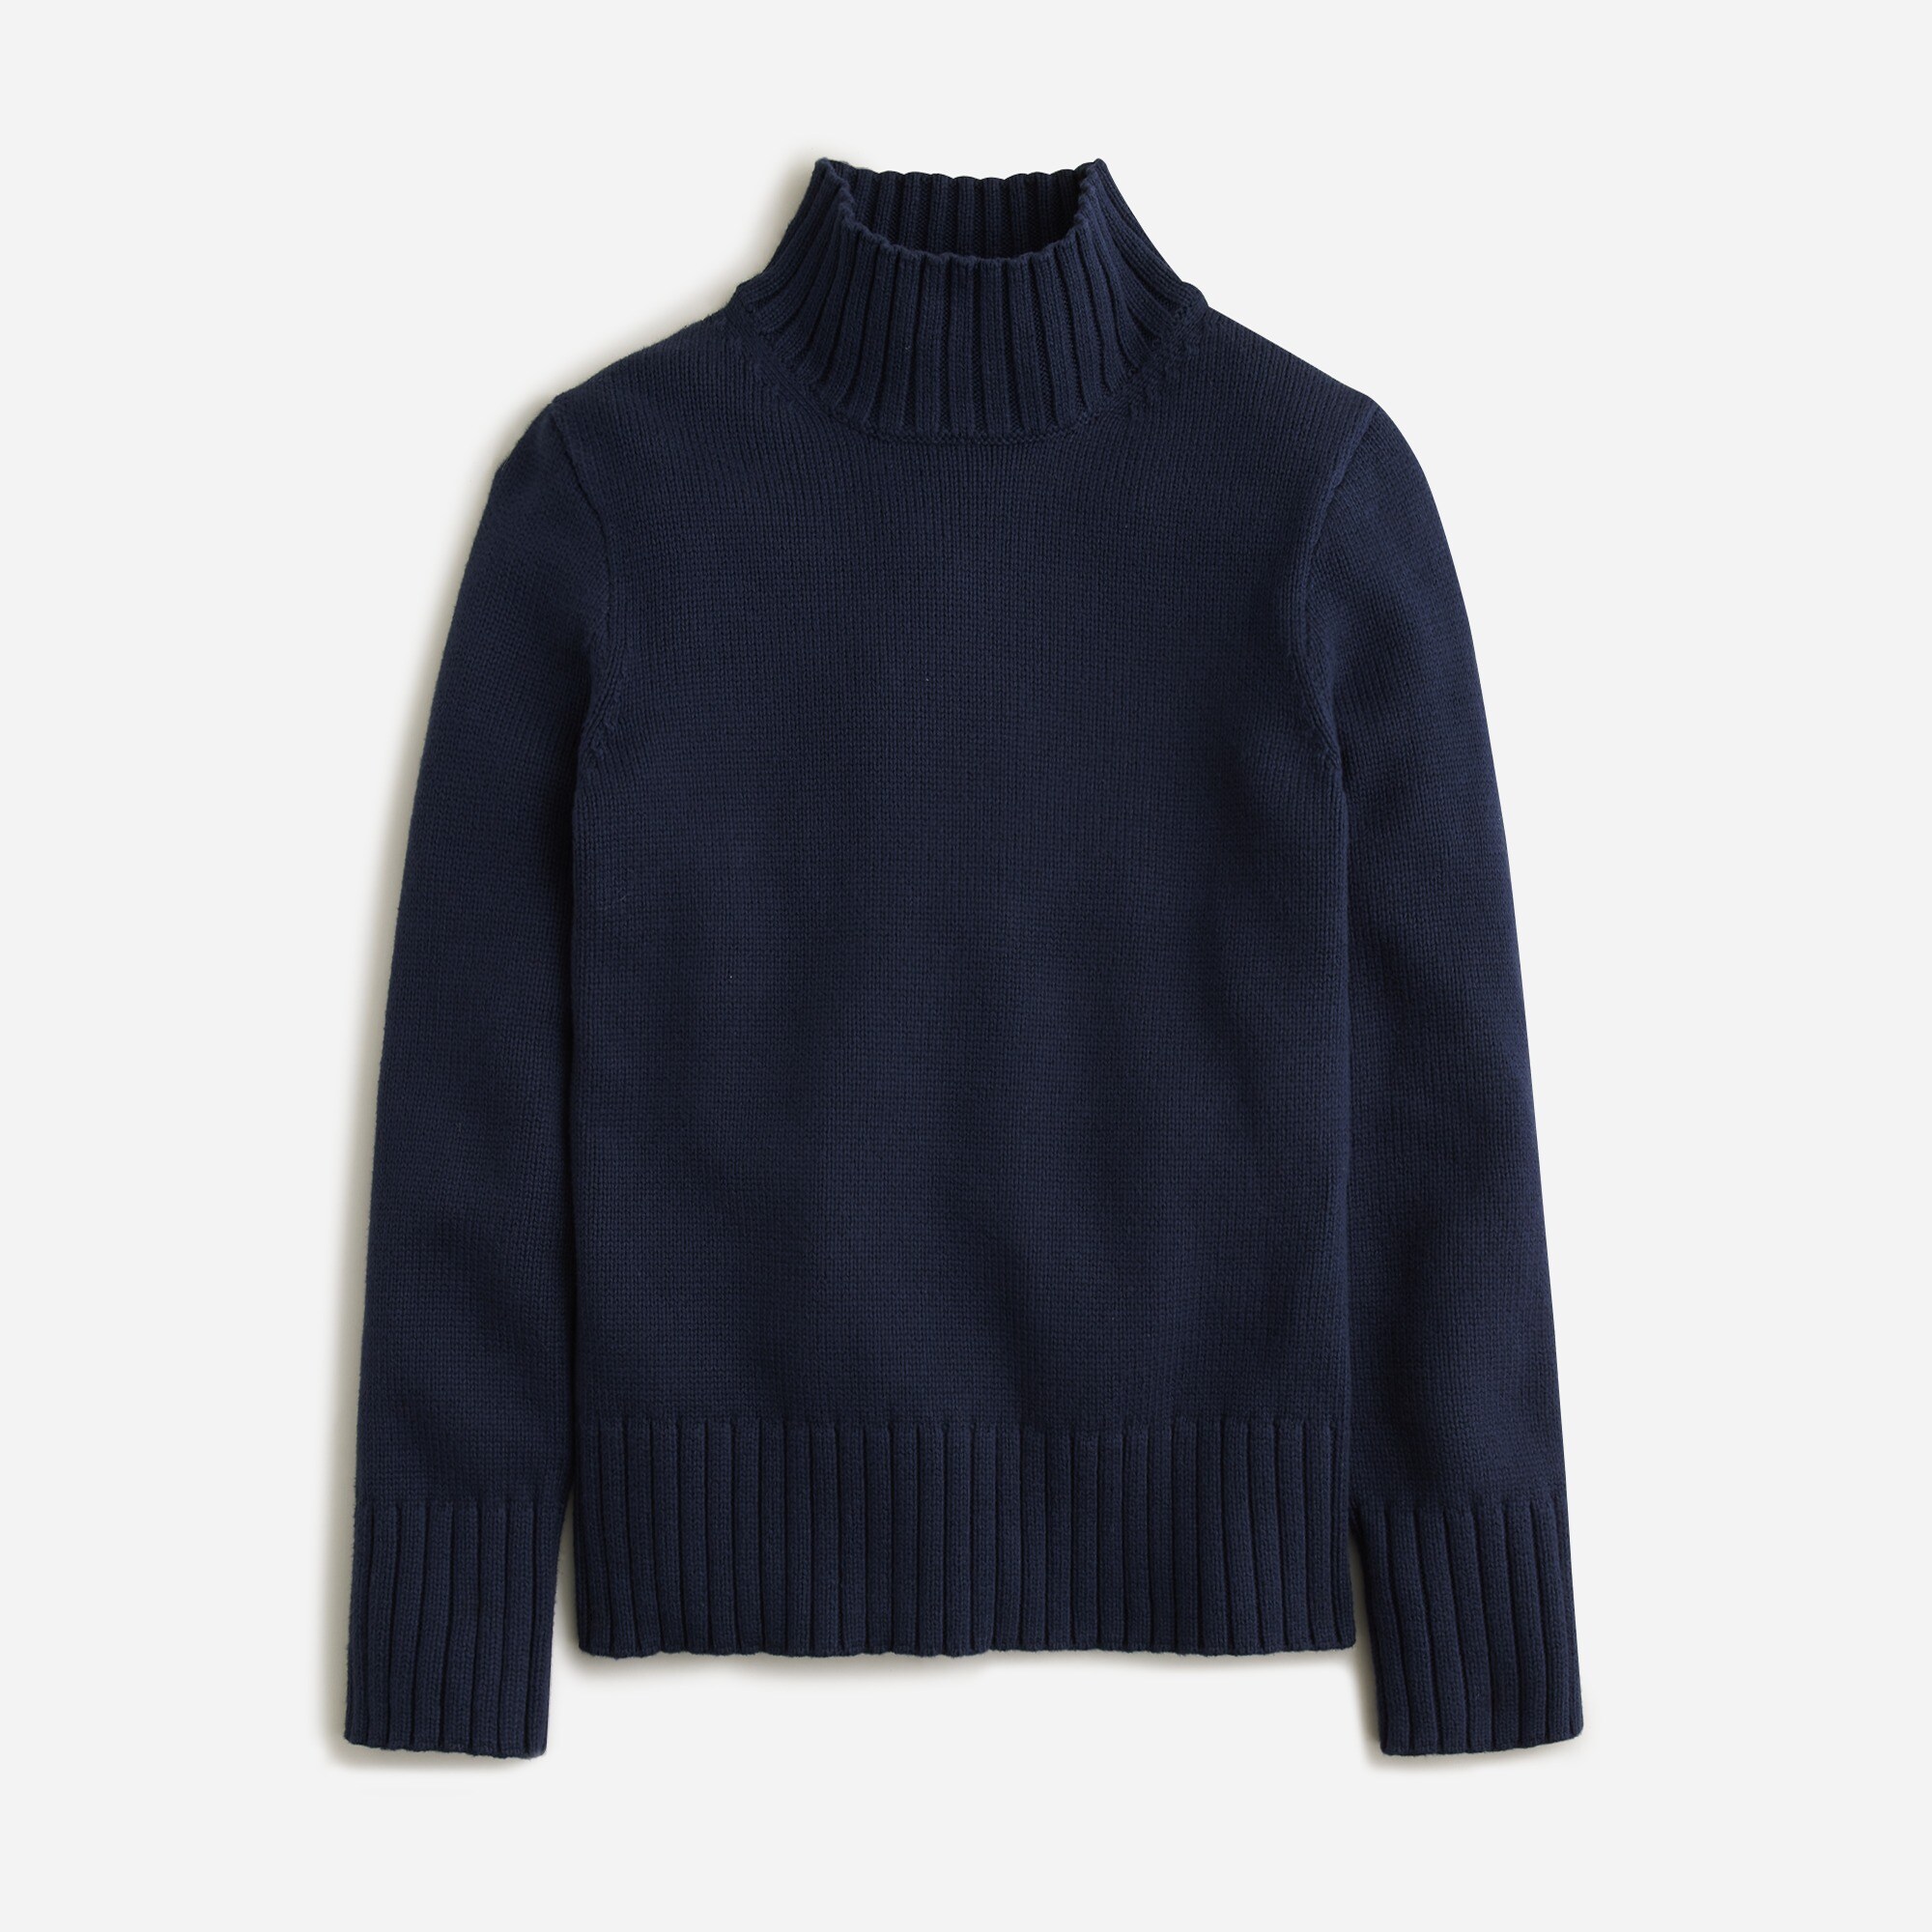  Cotton turtleneck sweater